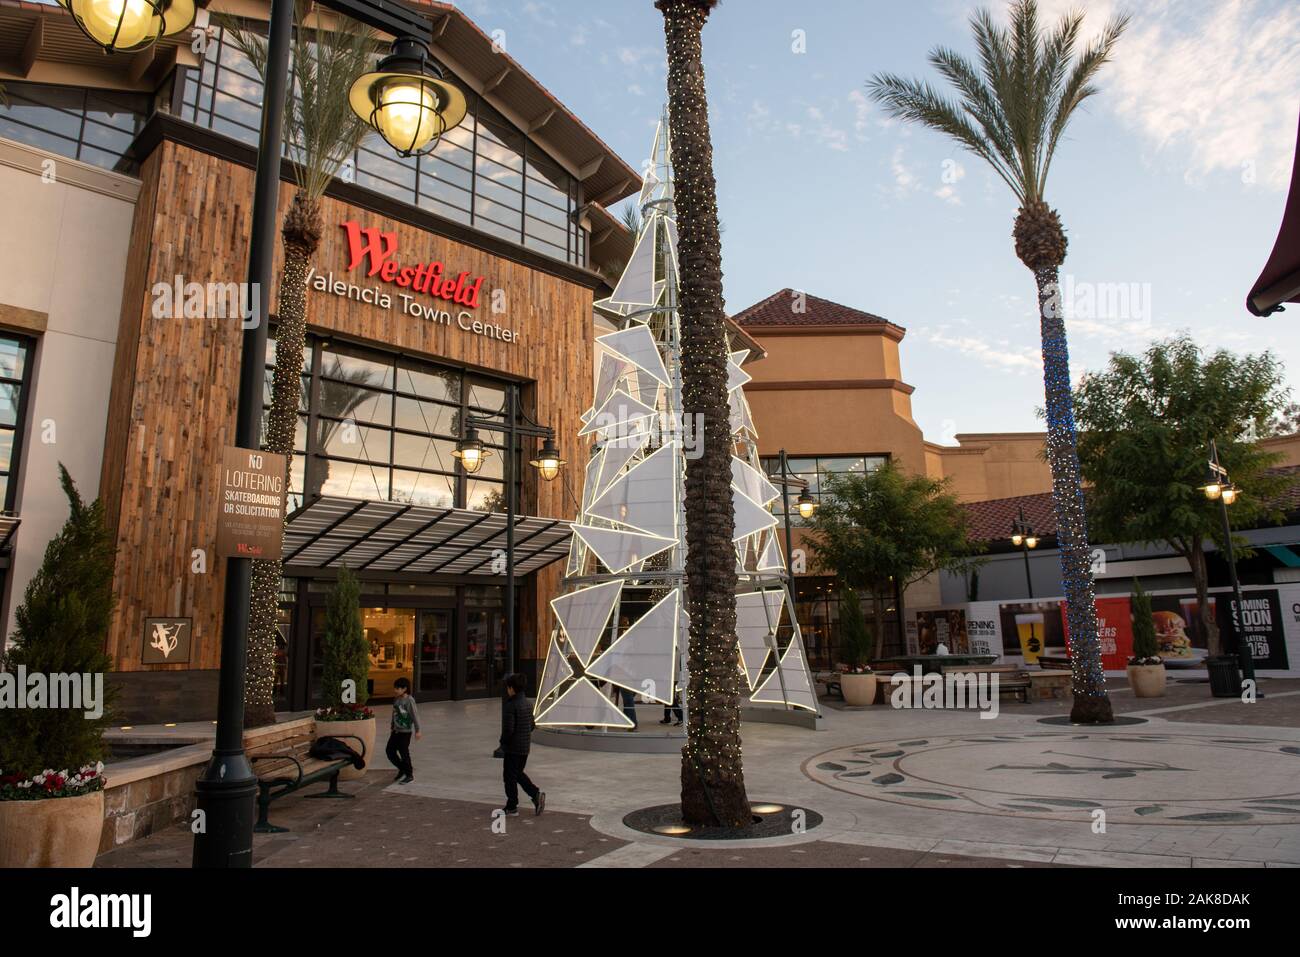 01.01.2020 - Valencia, CA: Westfield Valenica Town Centre - Eingangsdesign in Santa Clarita, CA, USA. Stockfoto